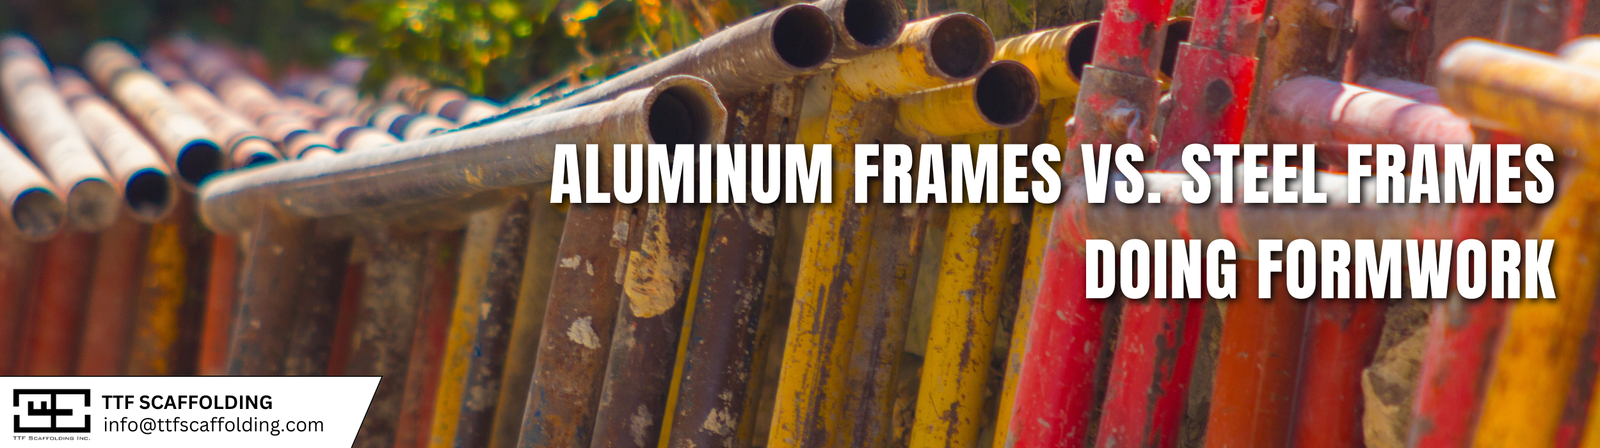 Strength and Durability: Aluminum Frames vs. Steel Frames doing Formwork